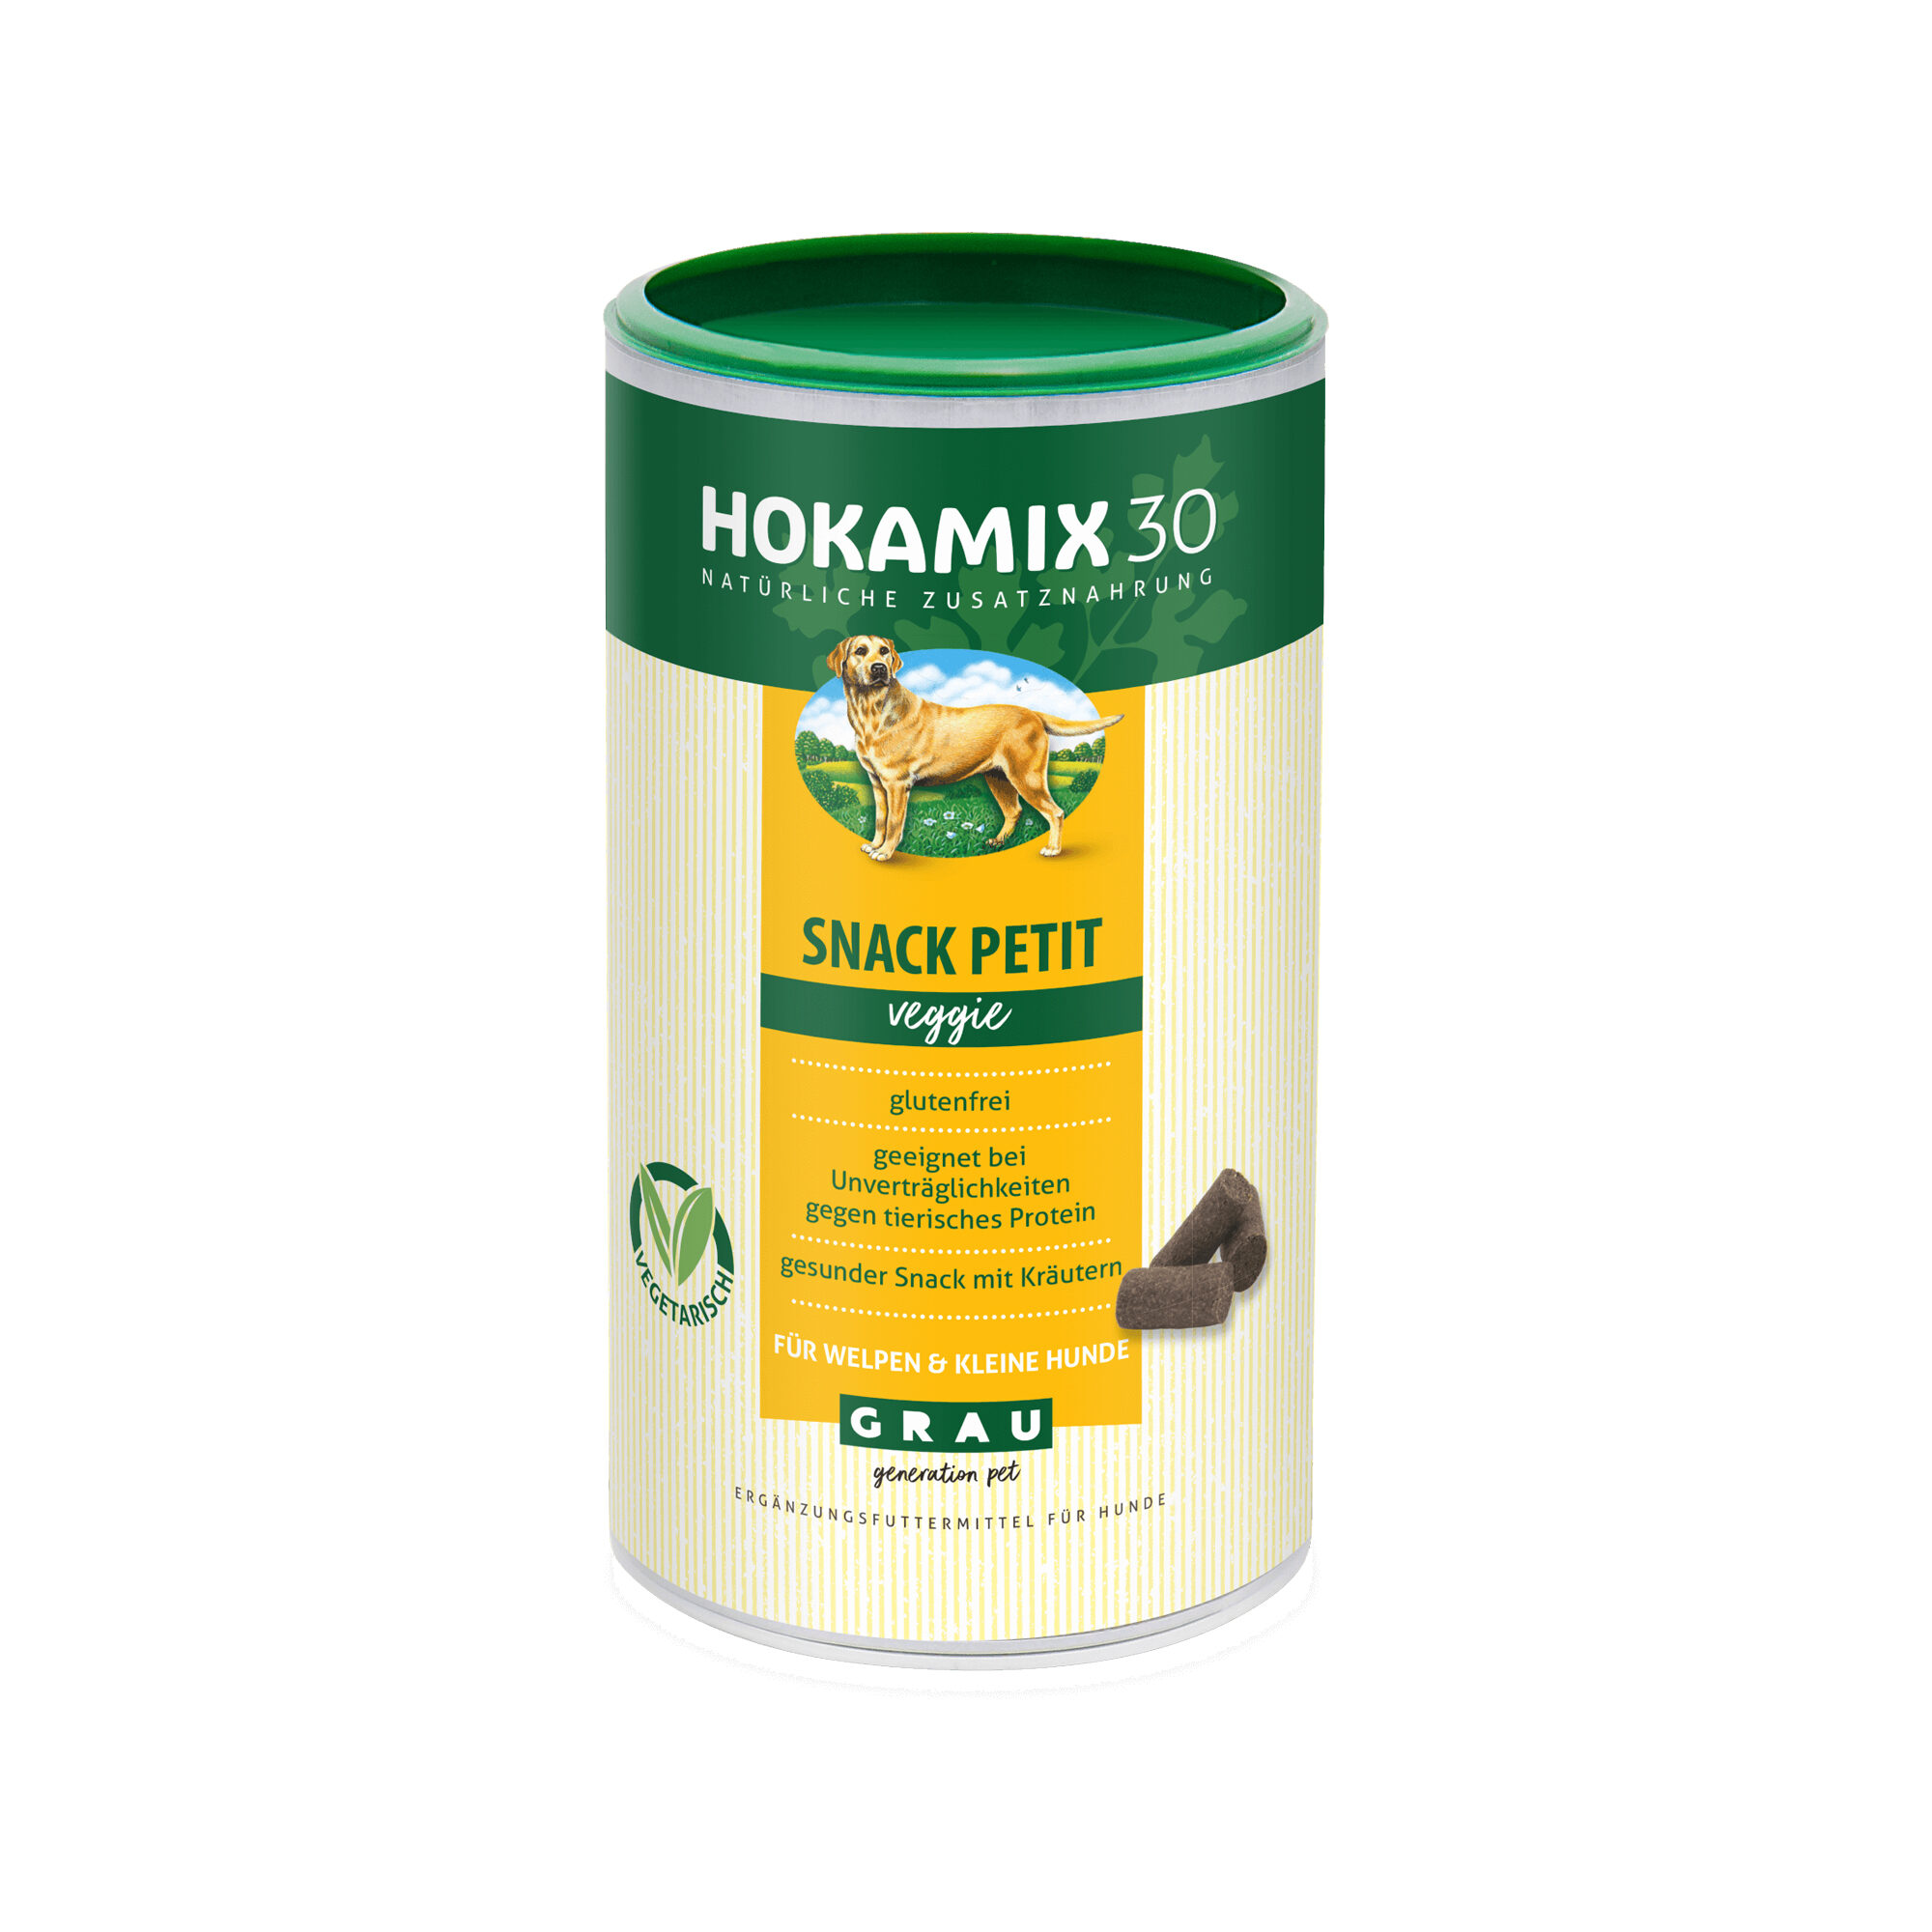 Hokamix 30 Snack Petit Veggie